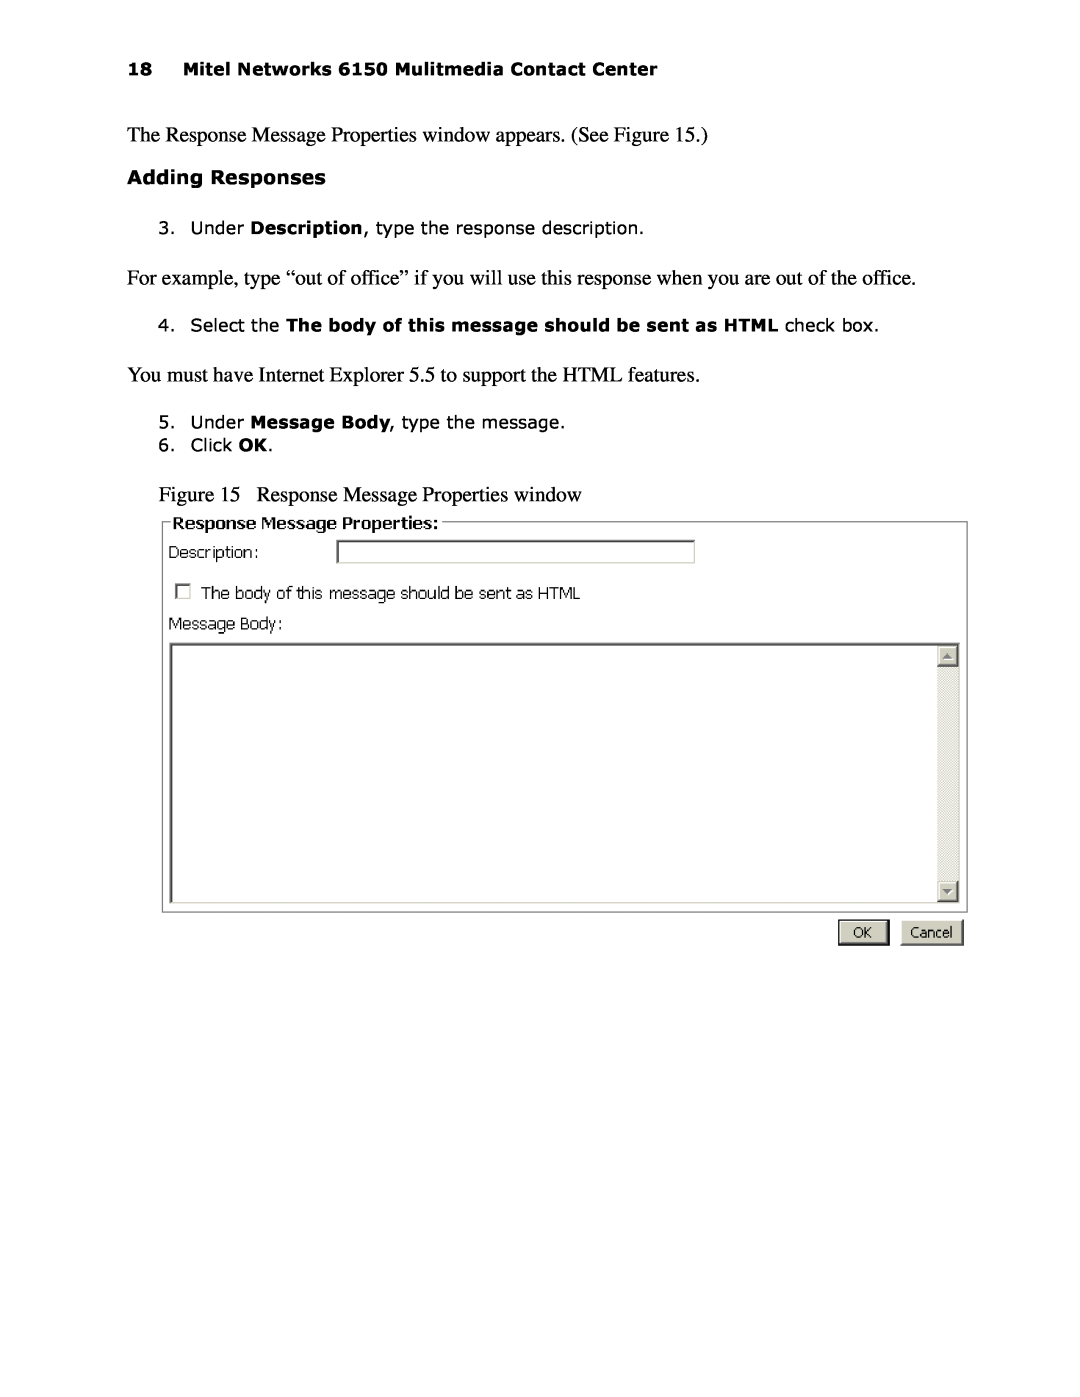 Mitel 6150 MCC manual Response Message Properties window 